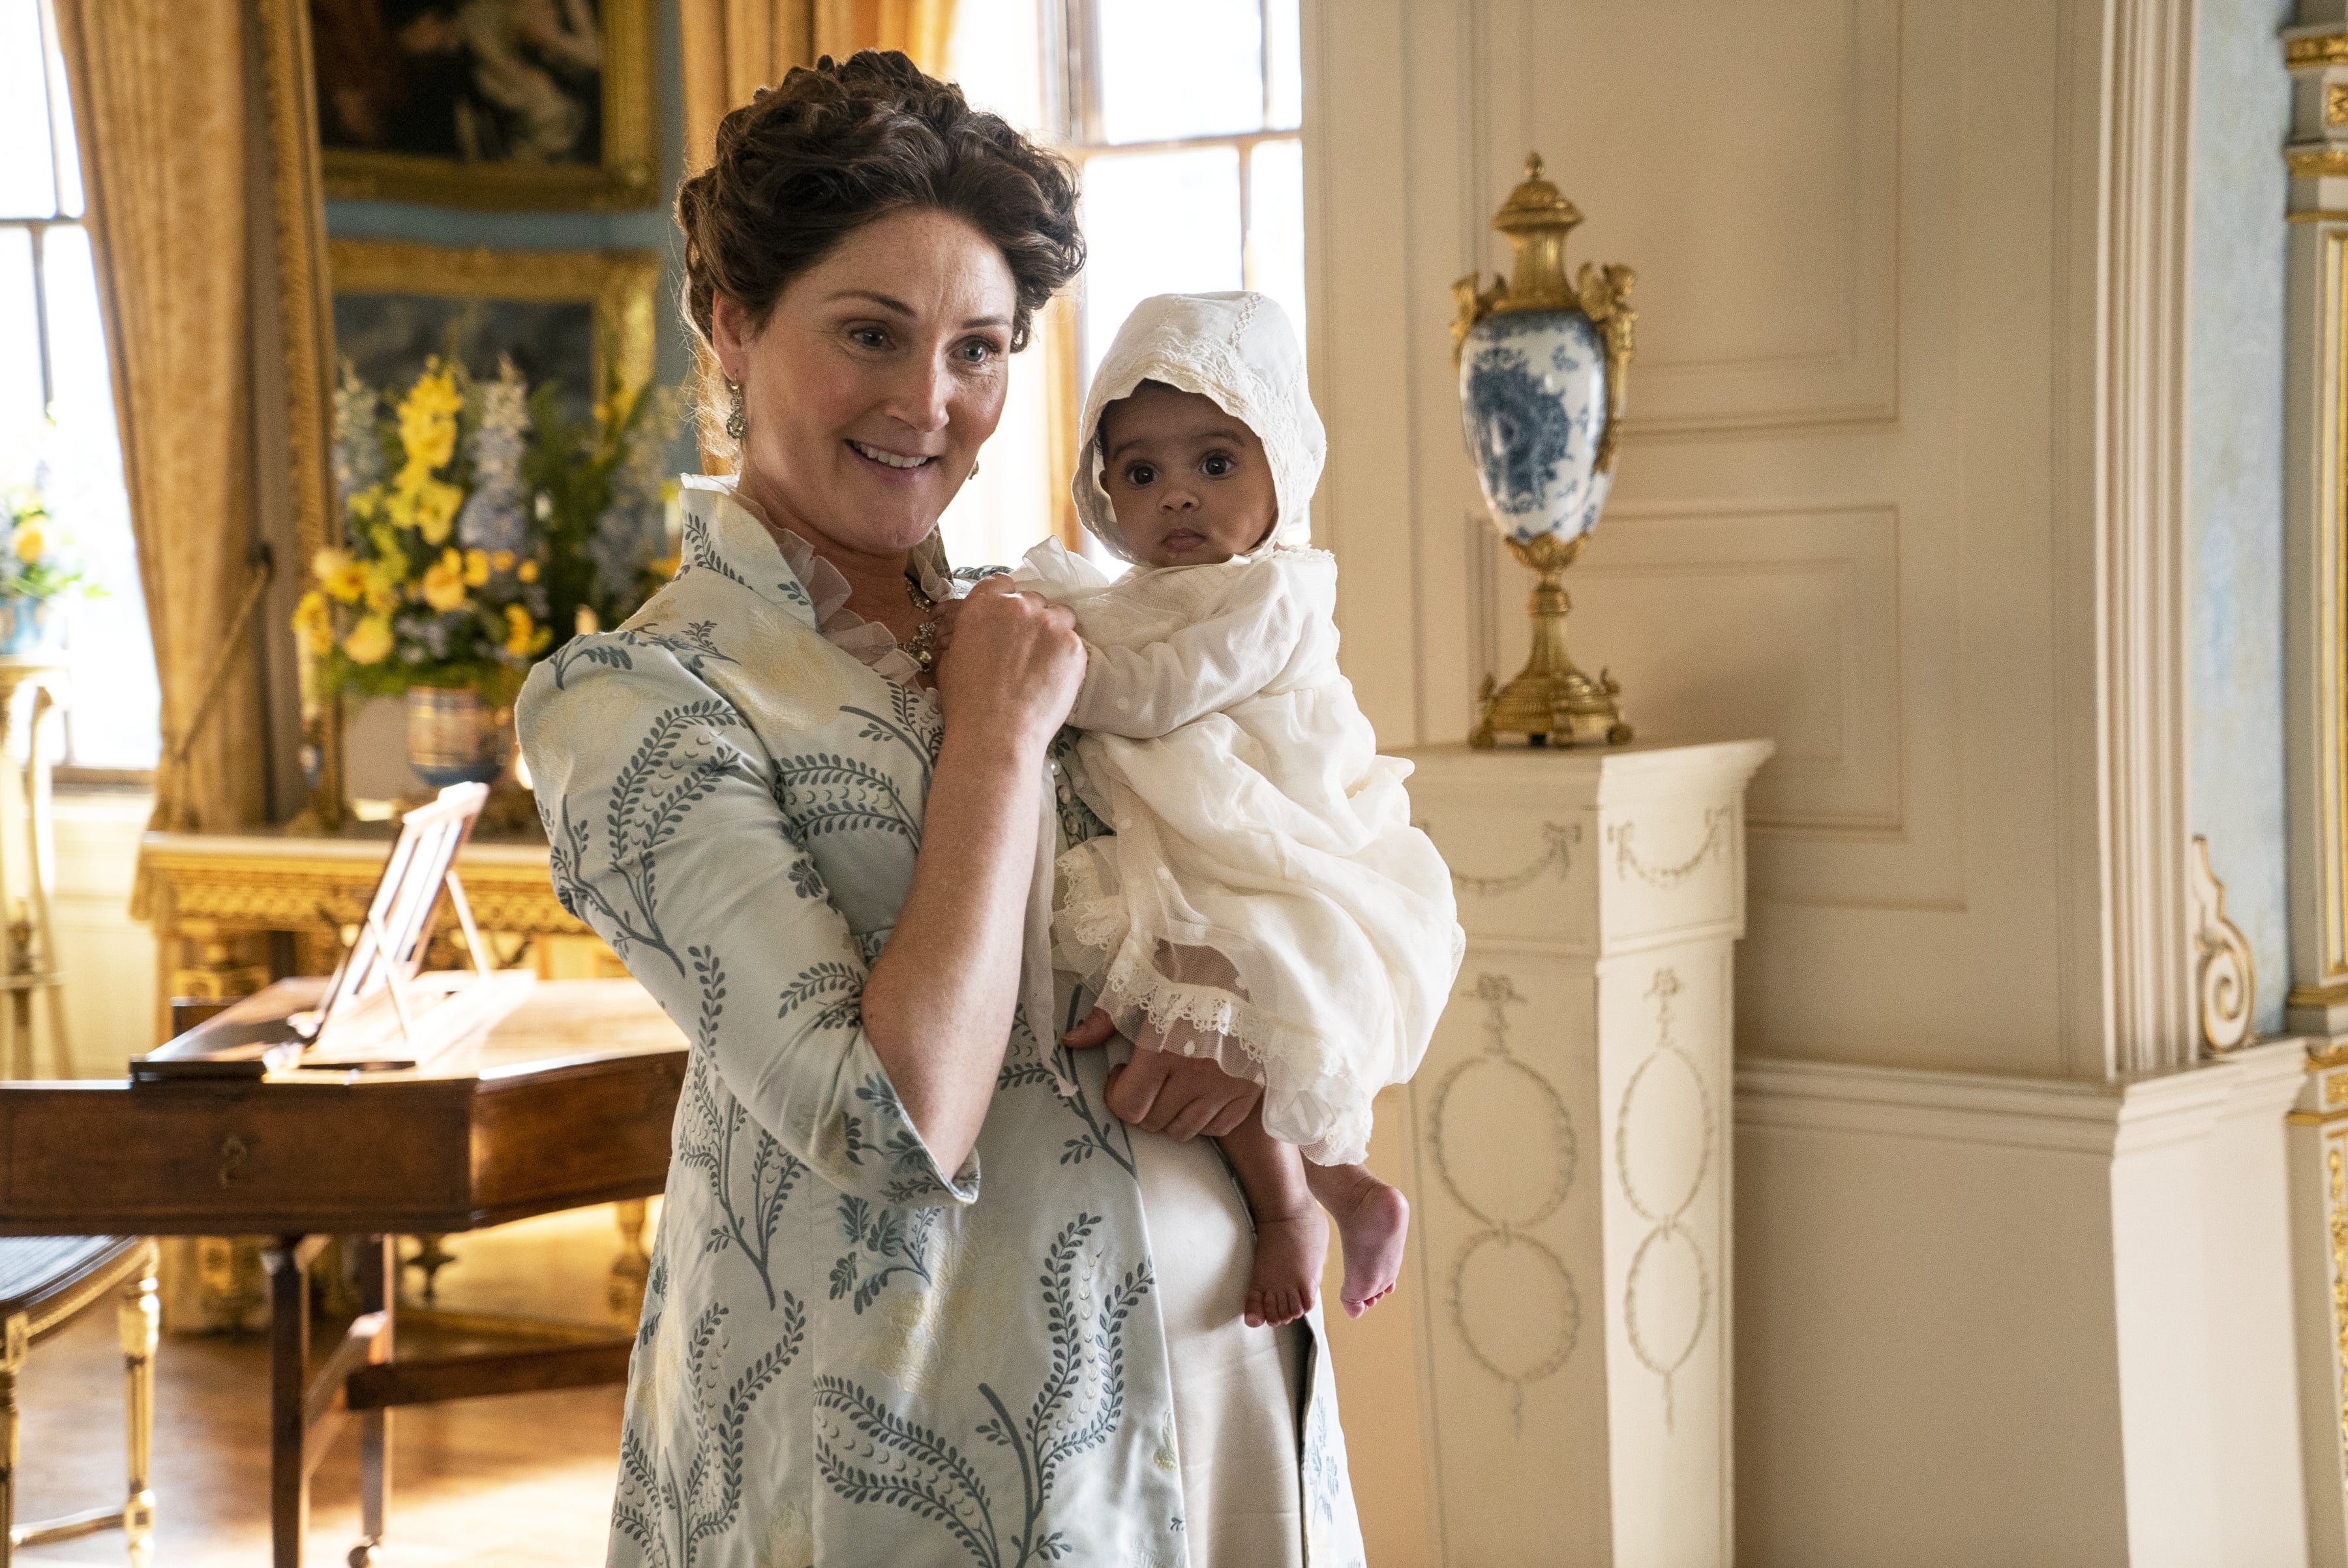 Simon & Daphne's Baby Makes An Appearance In the 'Bridgerton' Season 2  Trailer - Tinybeans